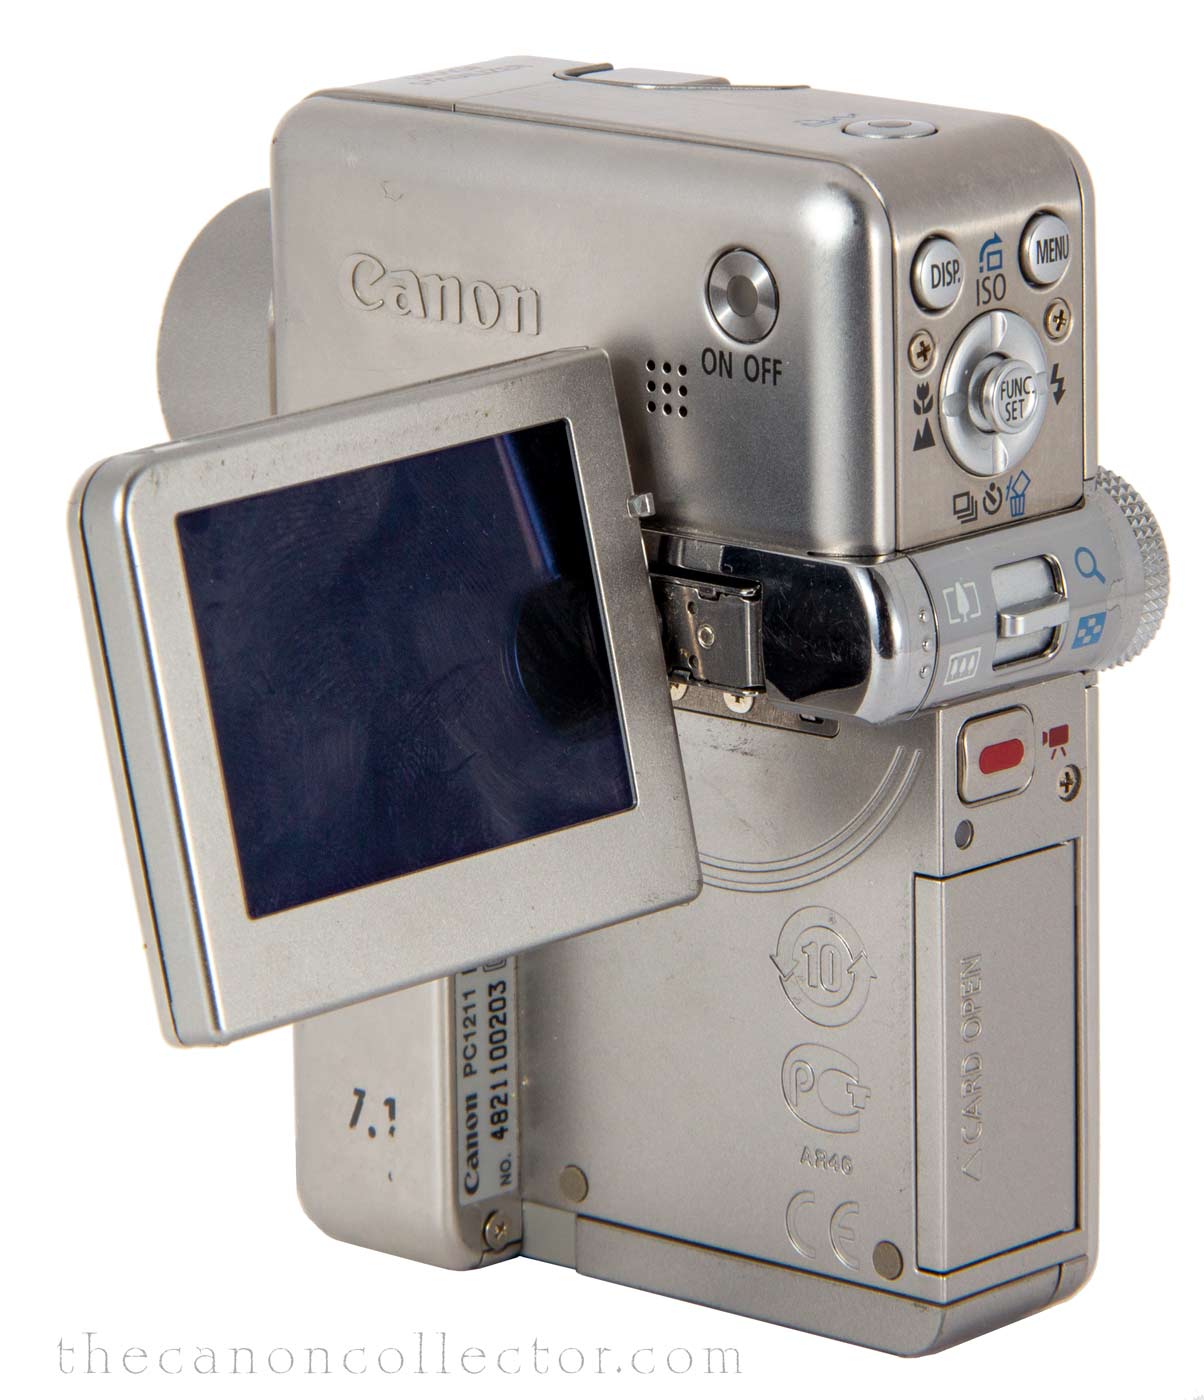 Canon PowerShot TX1 Camera